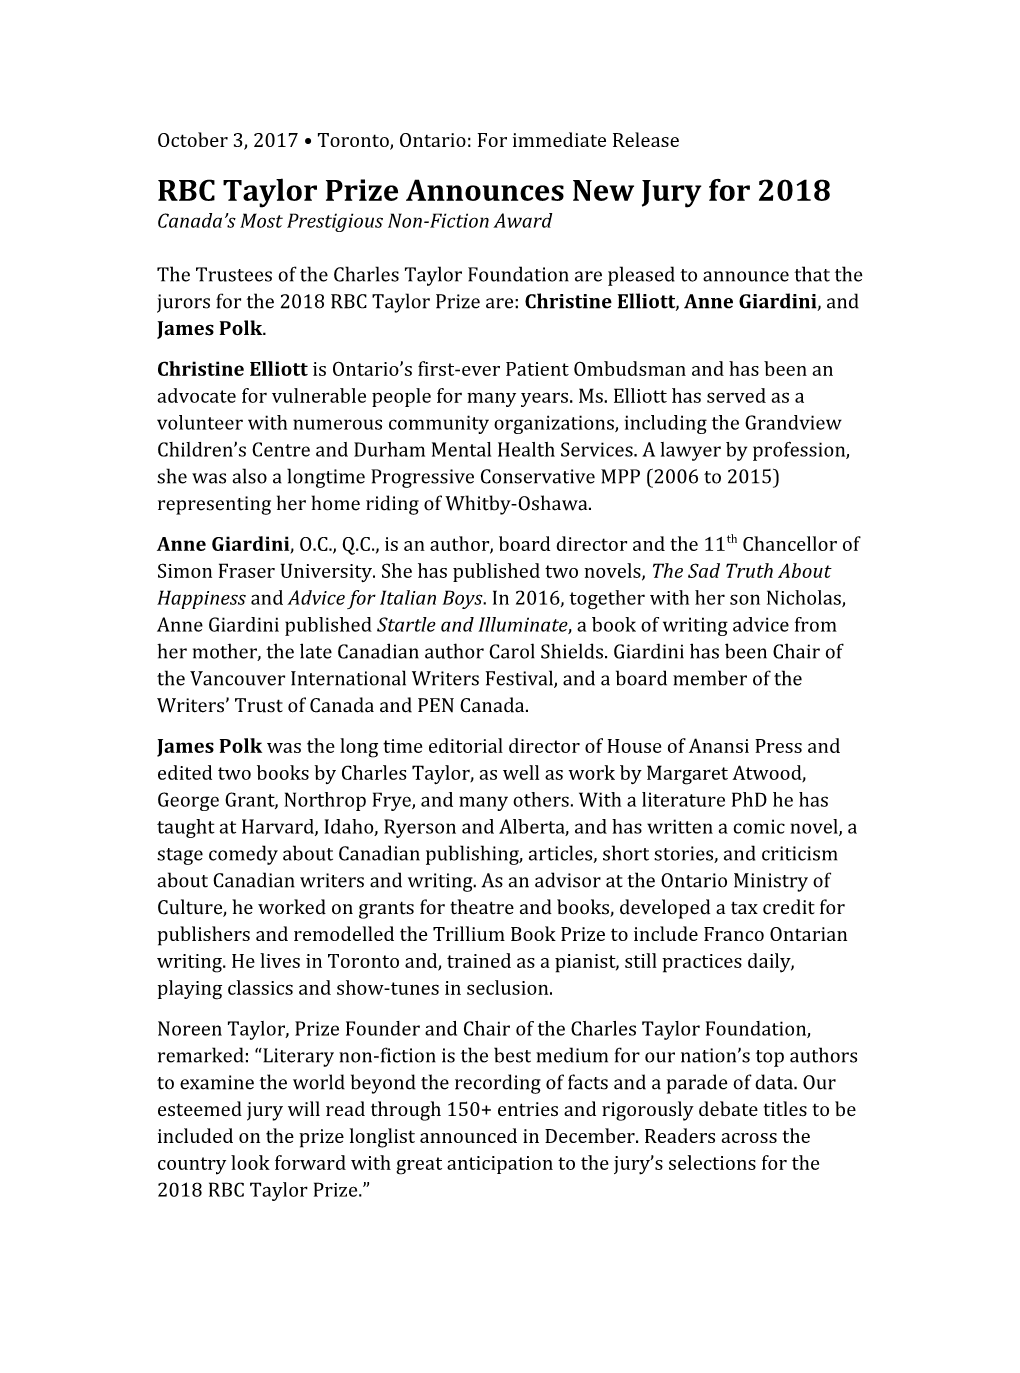 RBC Taylor Prize Announces New Jury for 2018